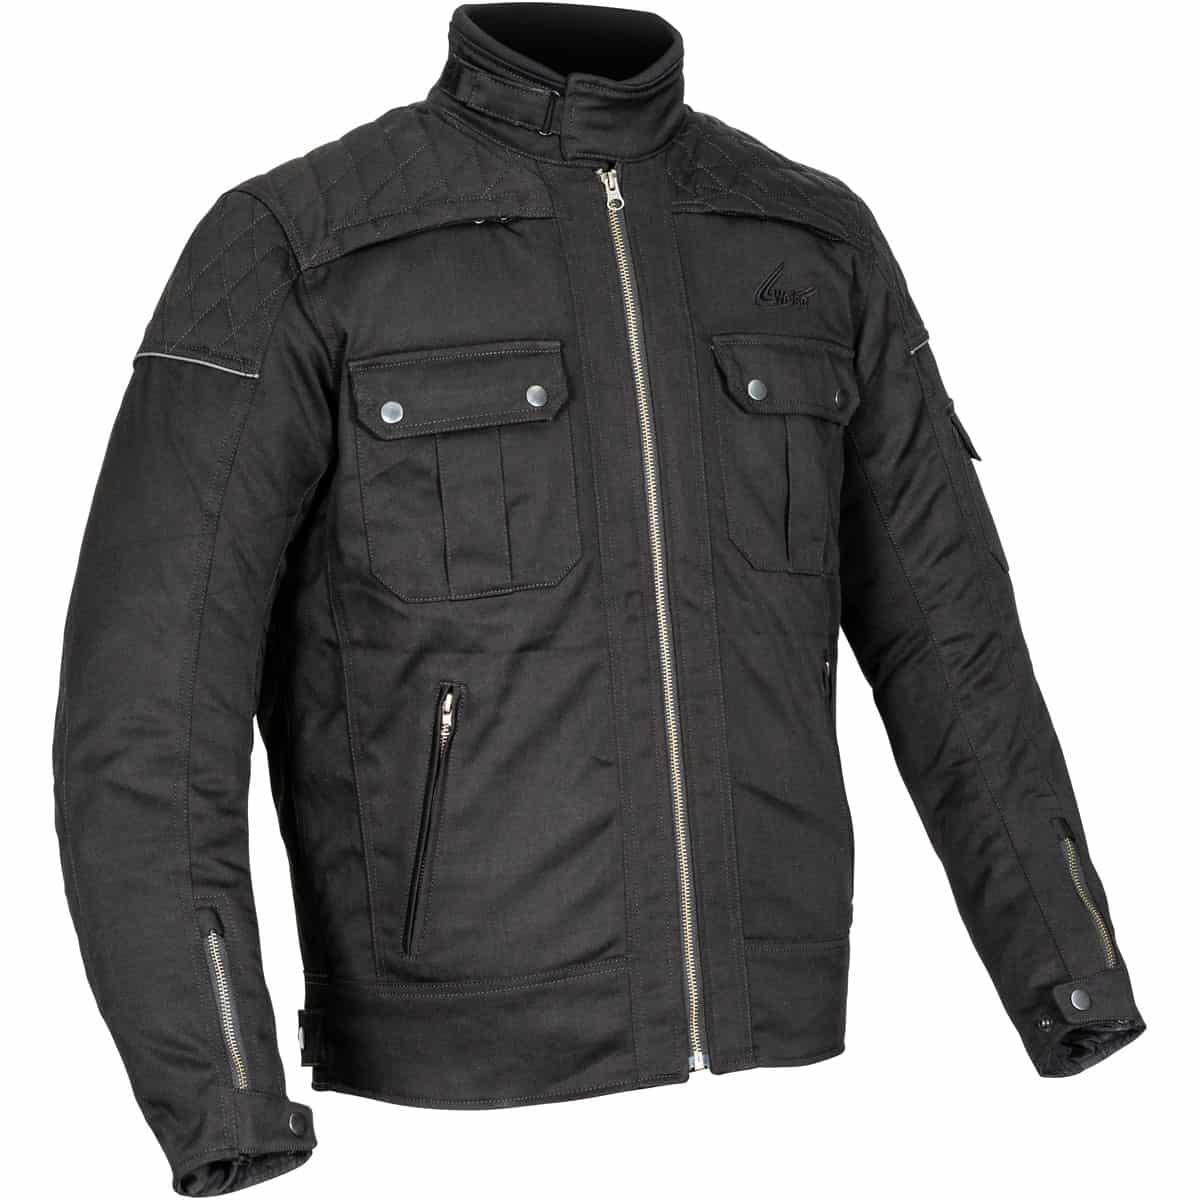 Weise Condor waterproof textile motorcycle jacket black right